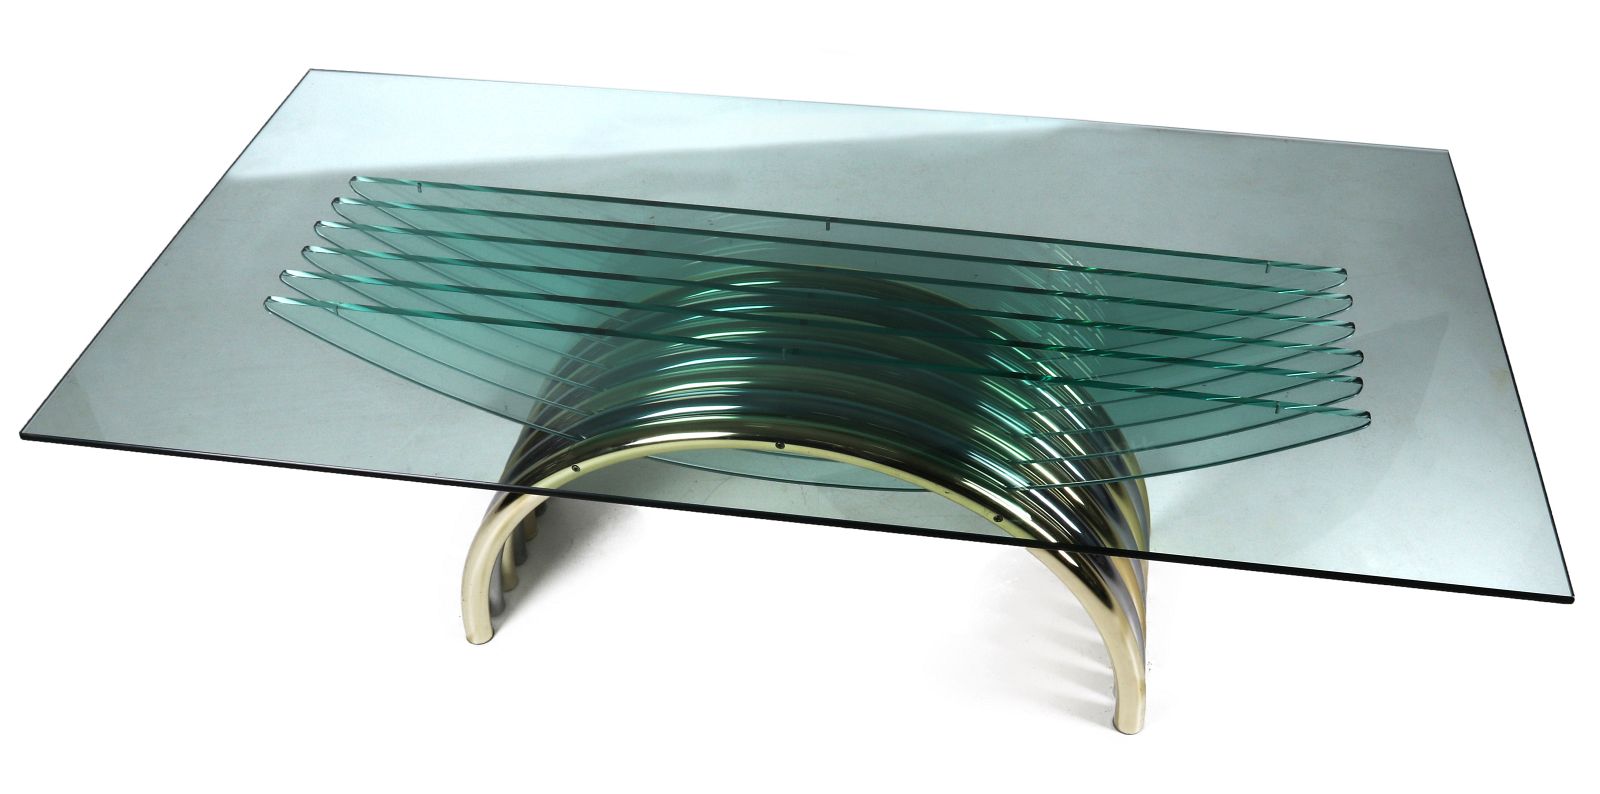 A MODERN GLASS/CHROME DINING TABLE ATT RENATO ZEVI